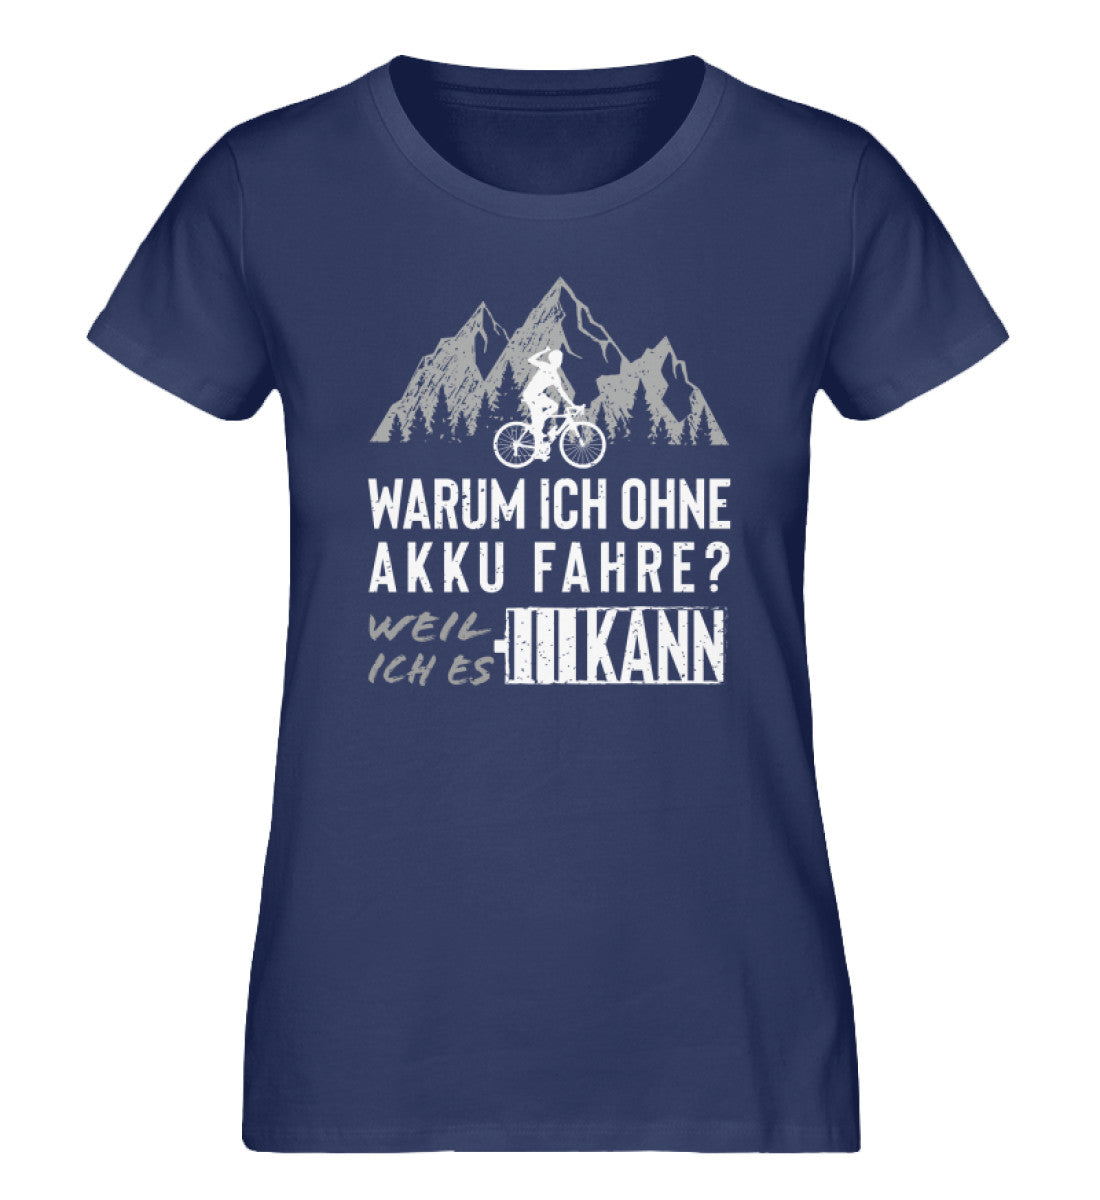 Warum ich ohne Akku fahre - Damen Organic T-Shirt fahrrad mountainbike Navyblau